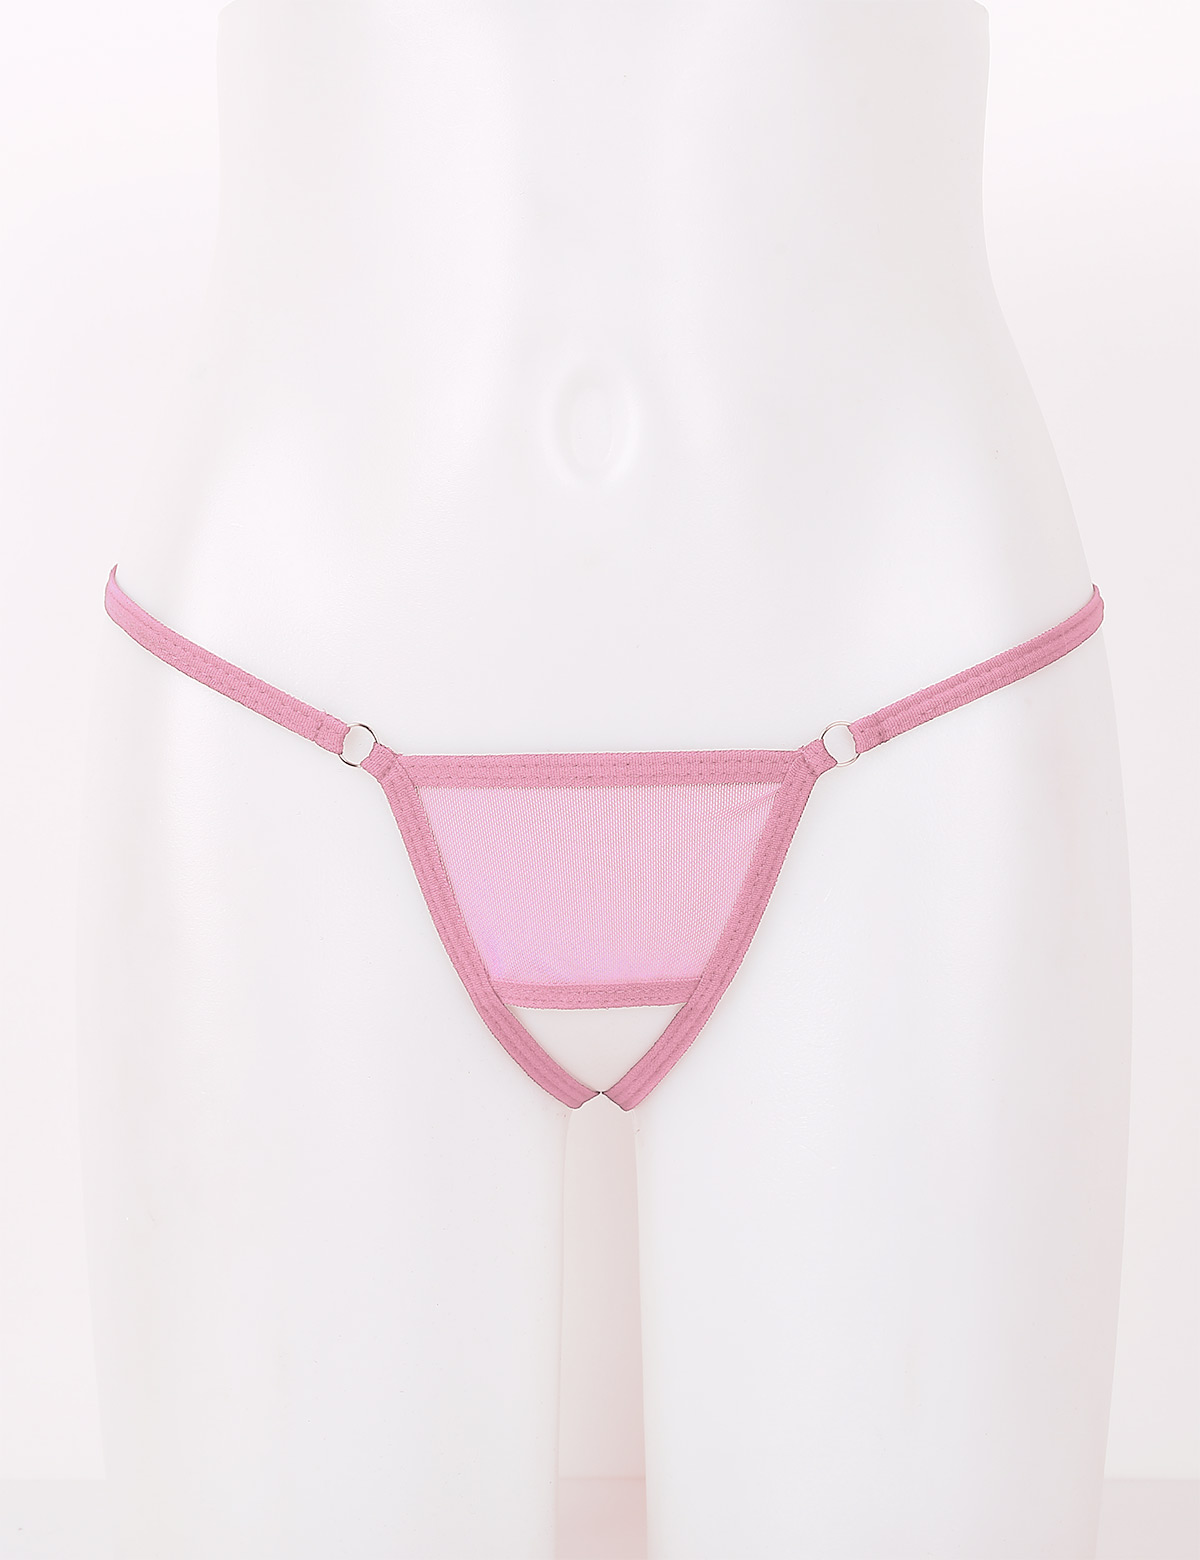 iiniim Mens Erotic Gay Transparent Lingerie Crotchless Penis Hole Sissy Panties Mini G-string Thongs Bikini Briefs Underwear